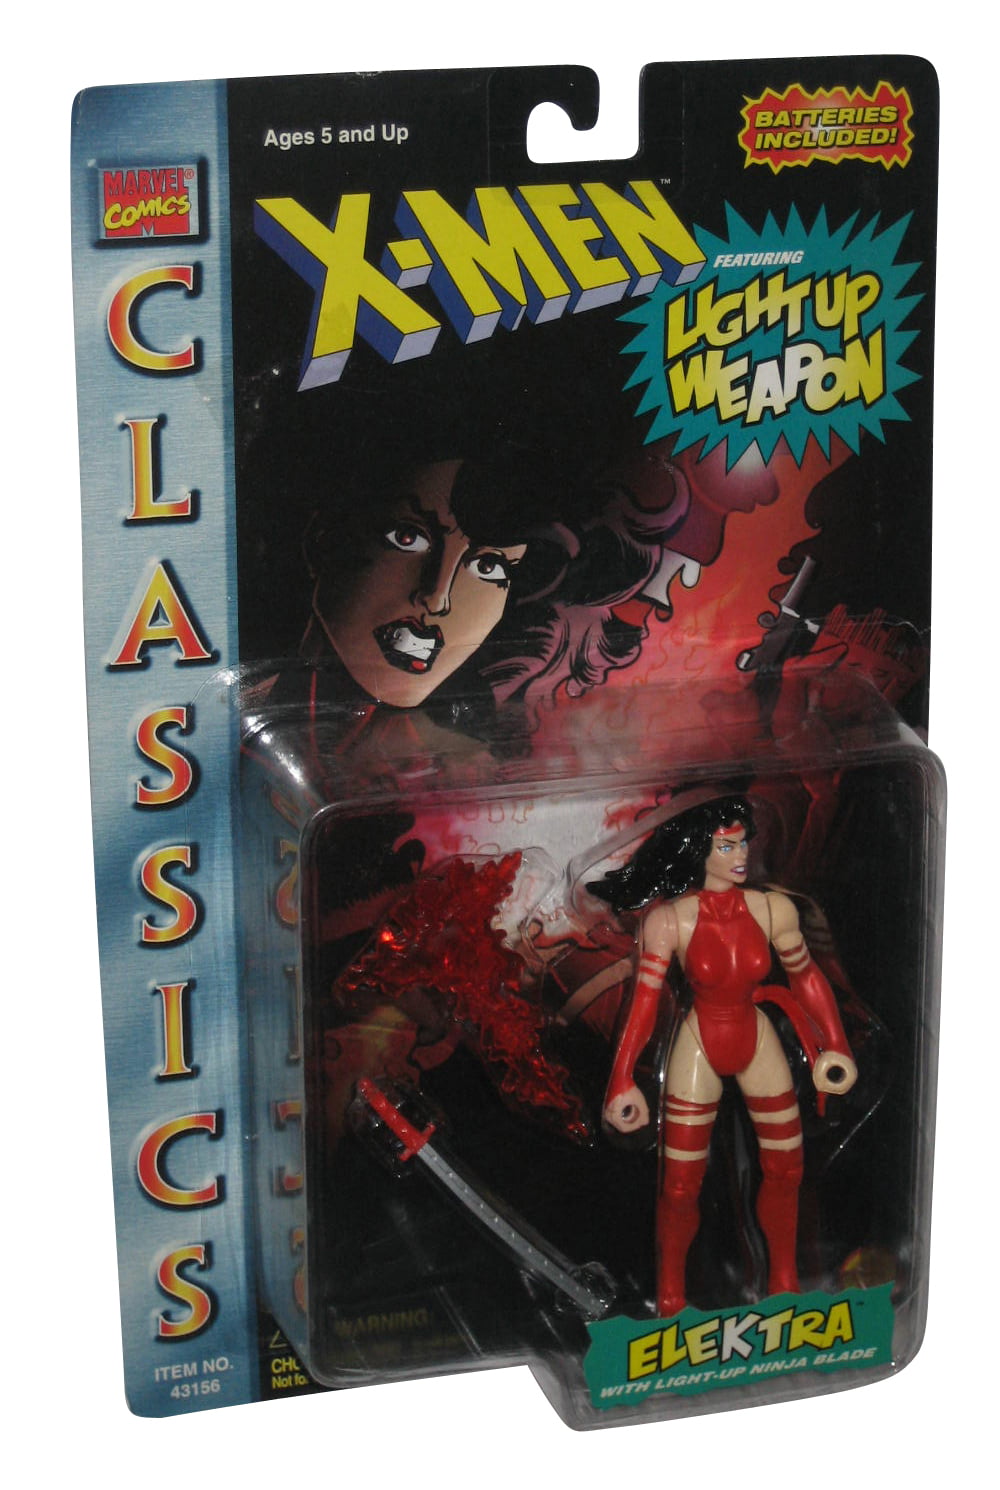 1996 MARVEL X-MEN ACTION FIGURE CLASSICS "ELEKTRA" with Light up Weapon 